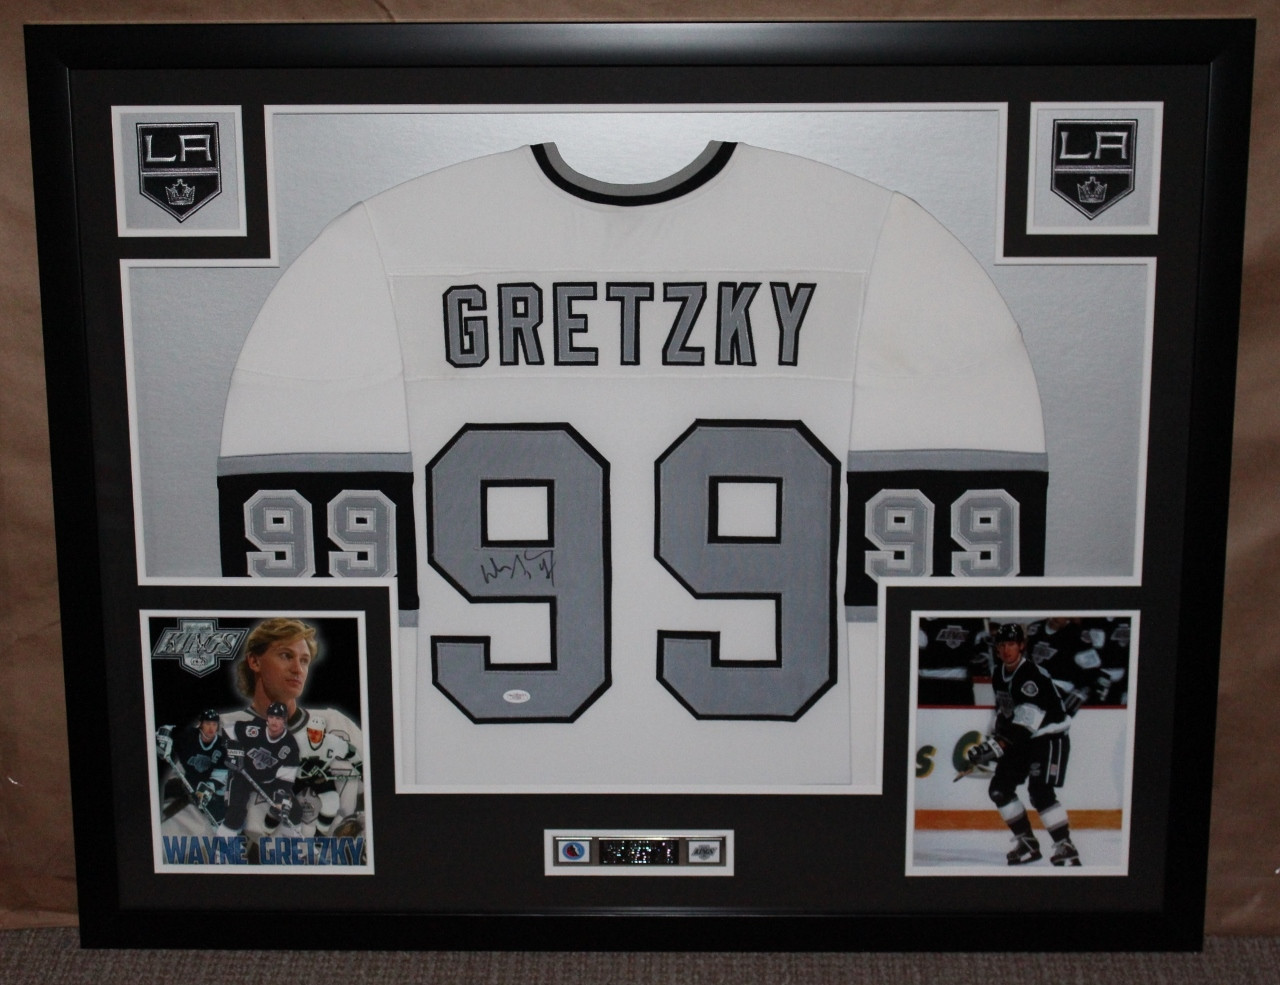 Wayne Gretzky Autographed Signed Framed Los Angeles Kings 